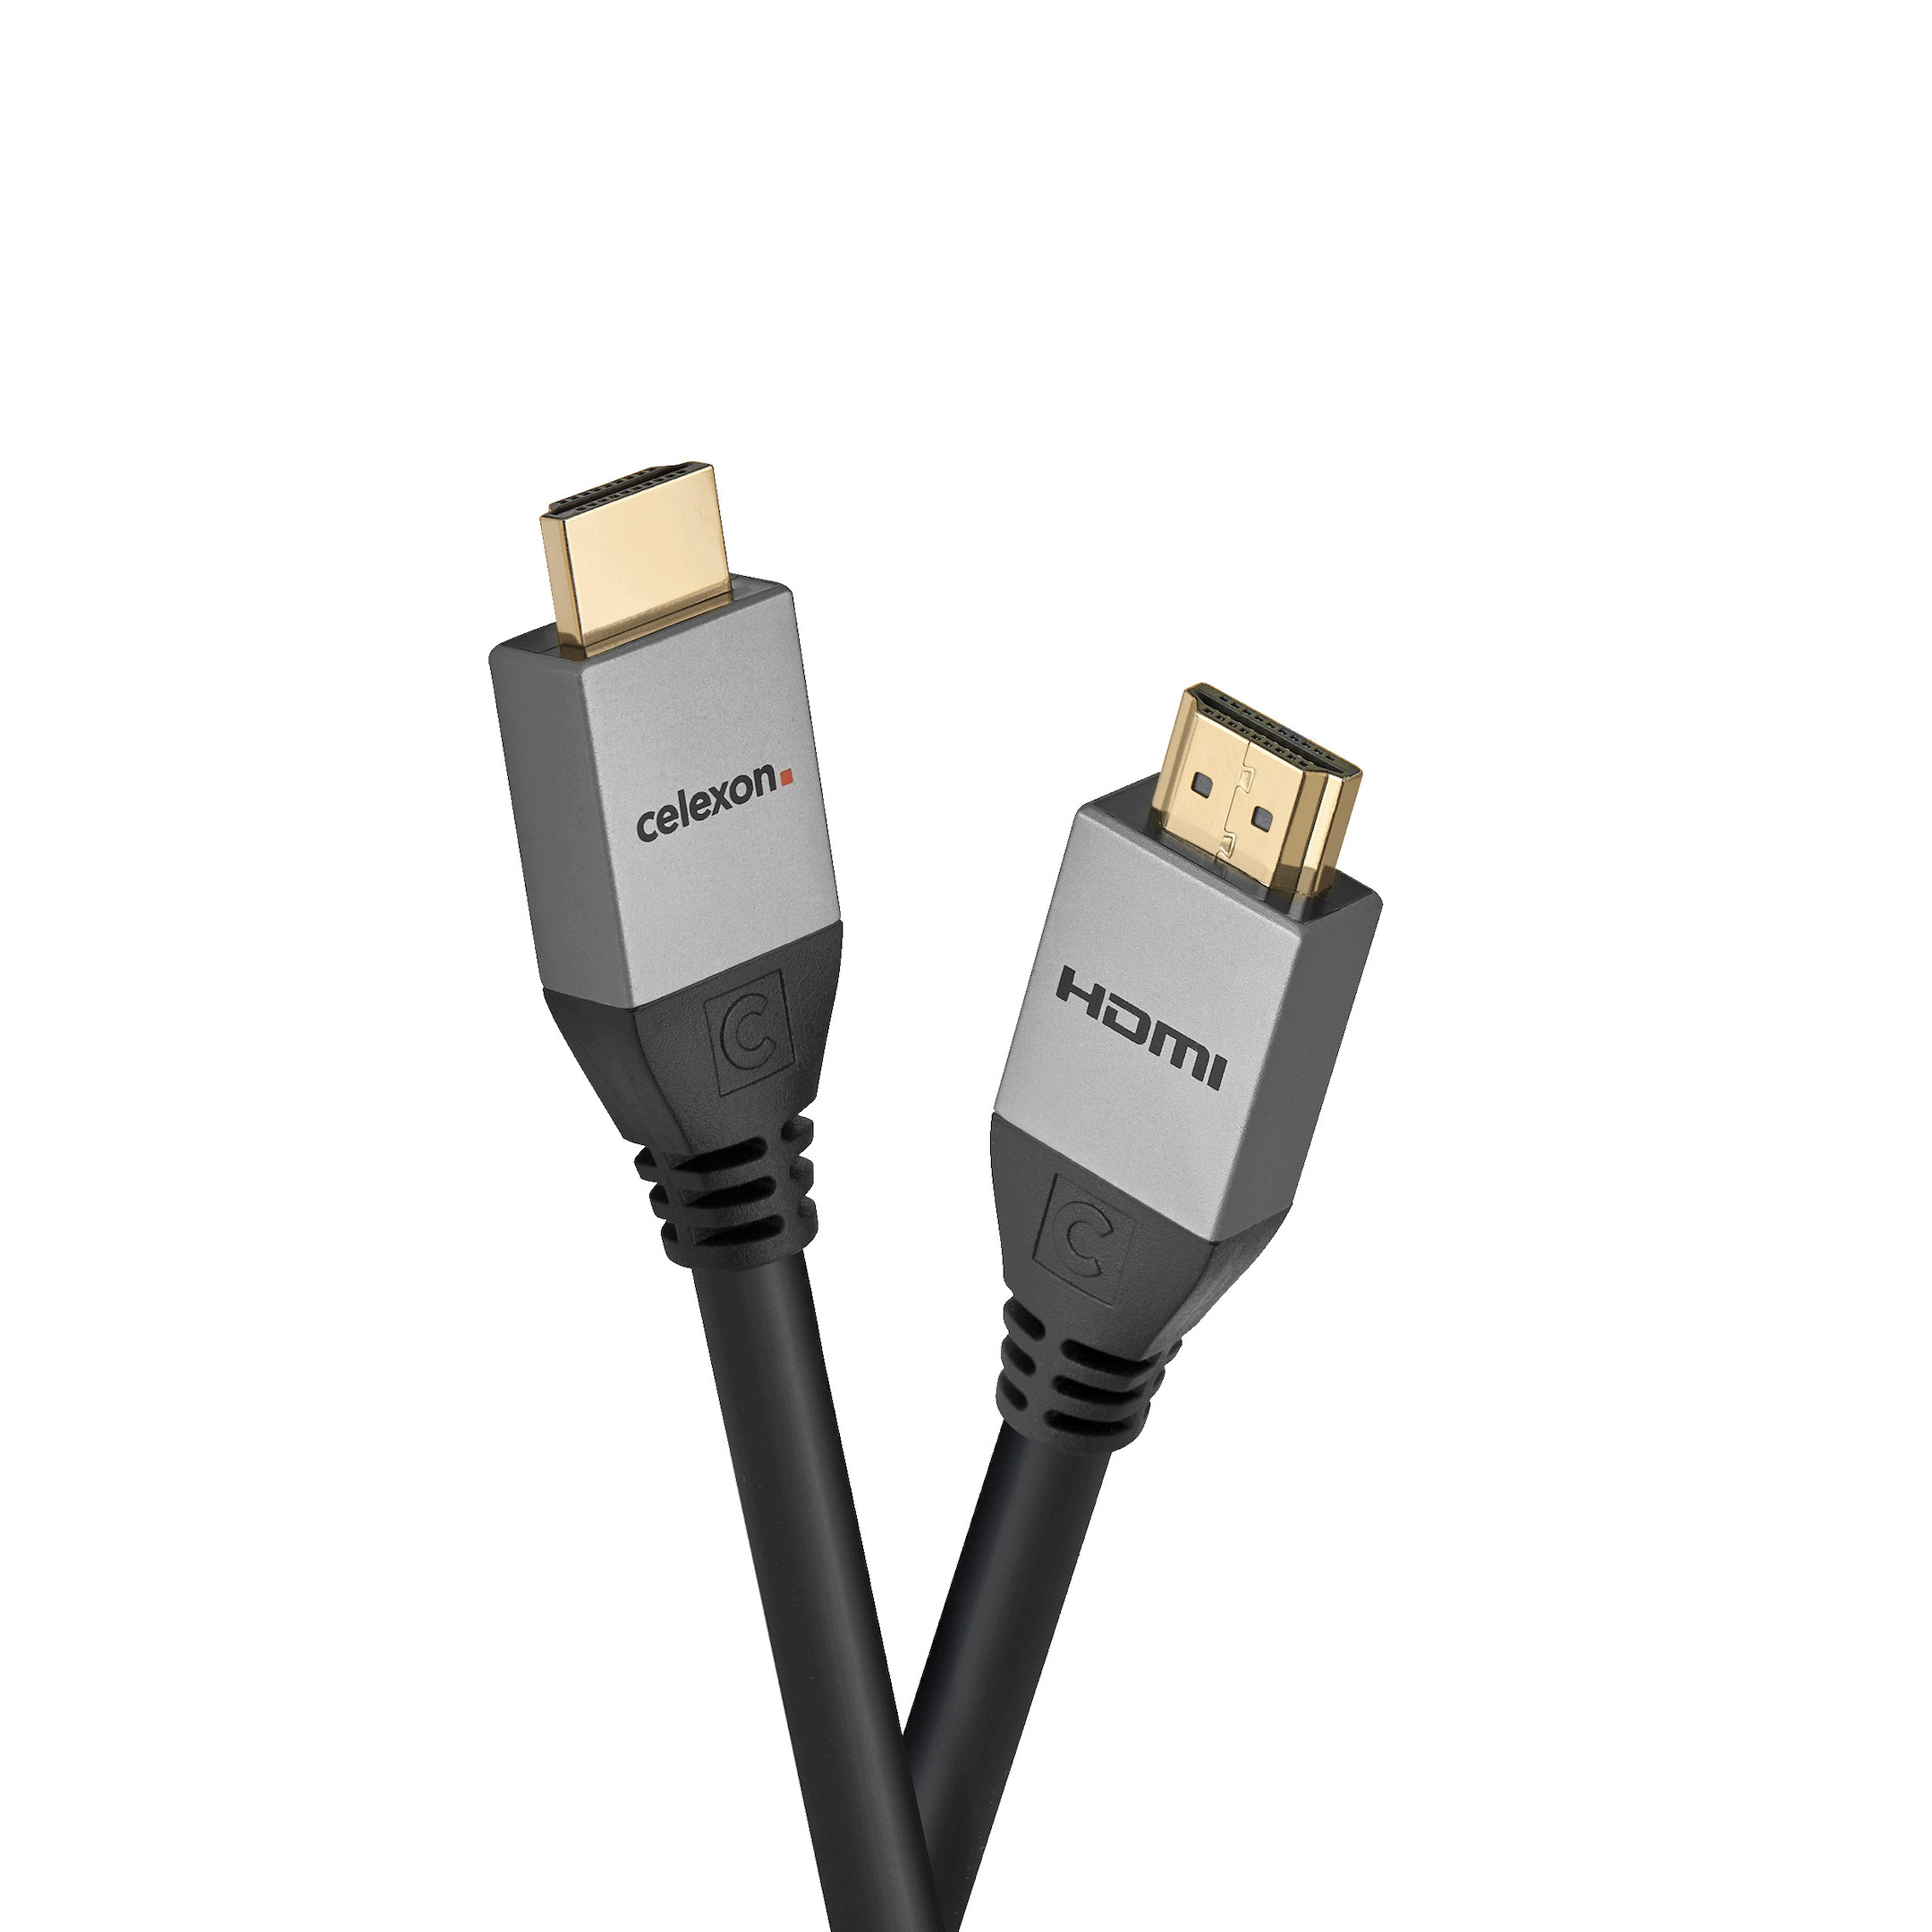 celexon-HDMI-kabel-met-Ethernet-2-0a-b-4K-1-5m-Professional